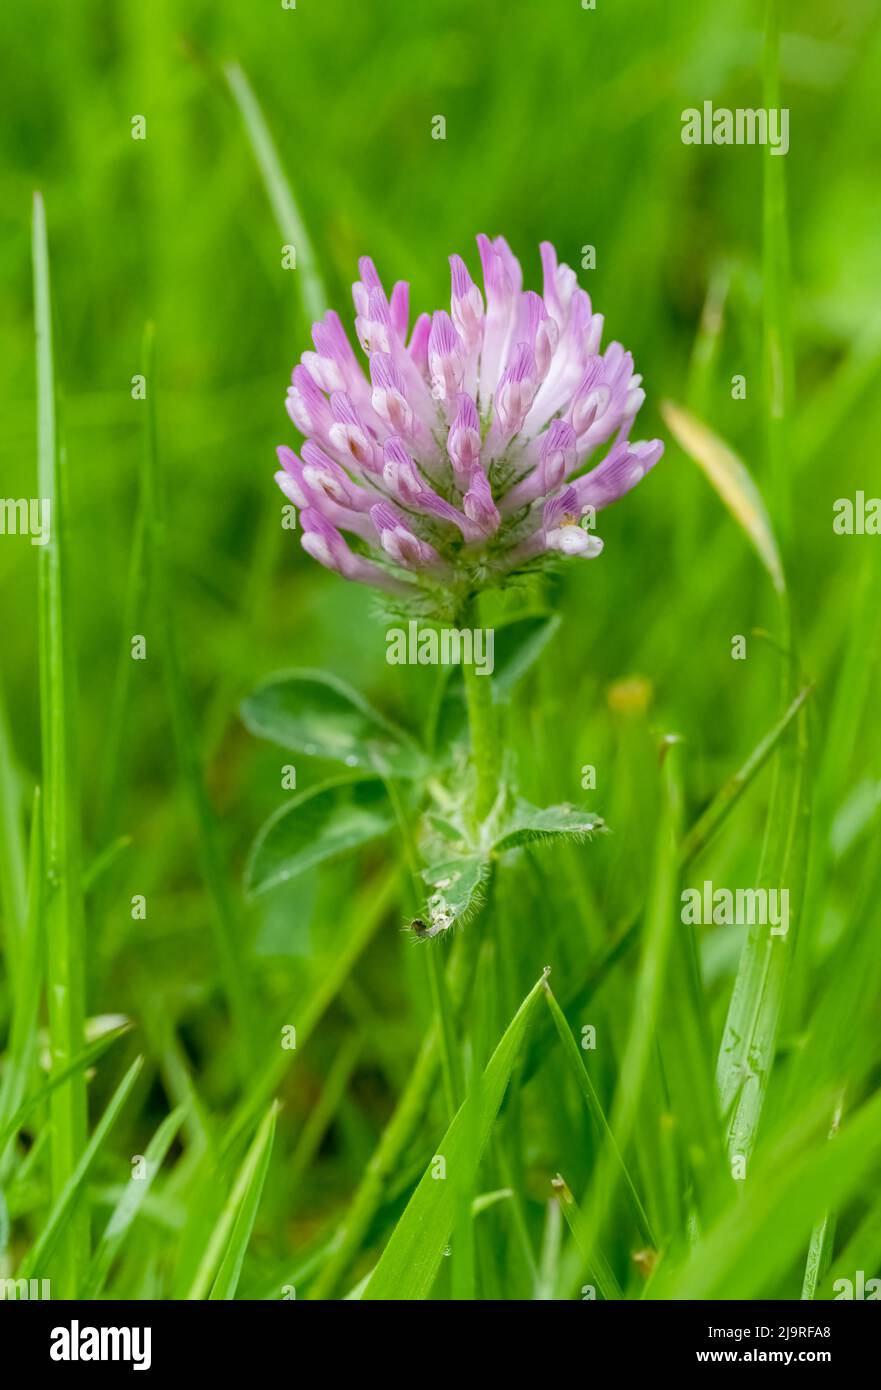 A beautiful flower of pink clover (Trifolium pratense) growing amongst grass Stock Photo